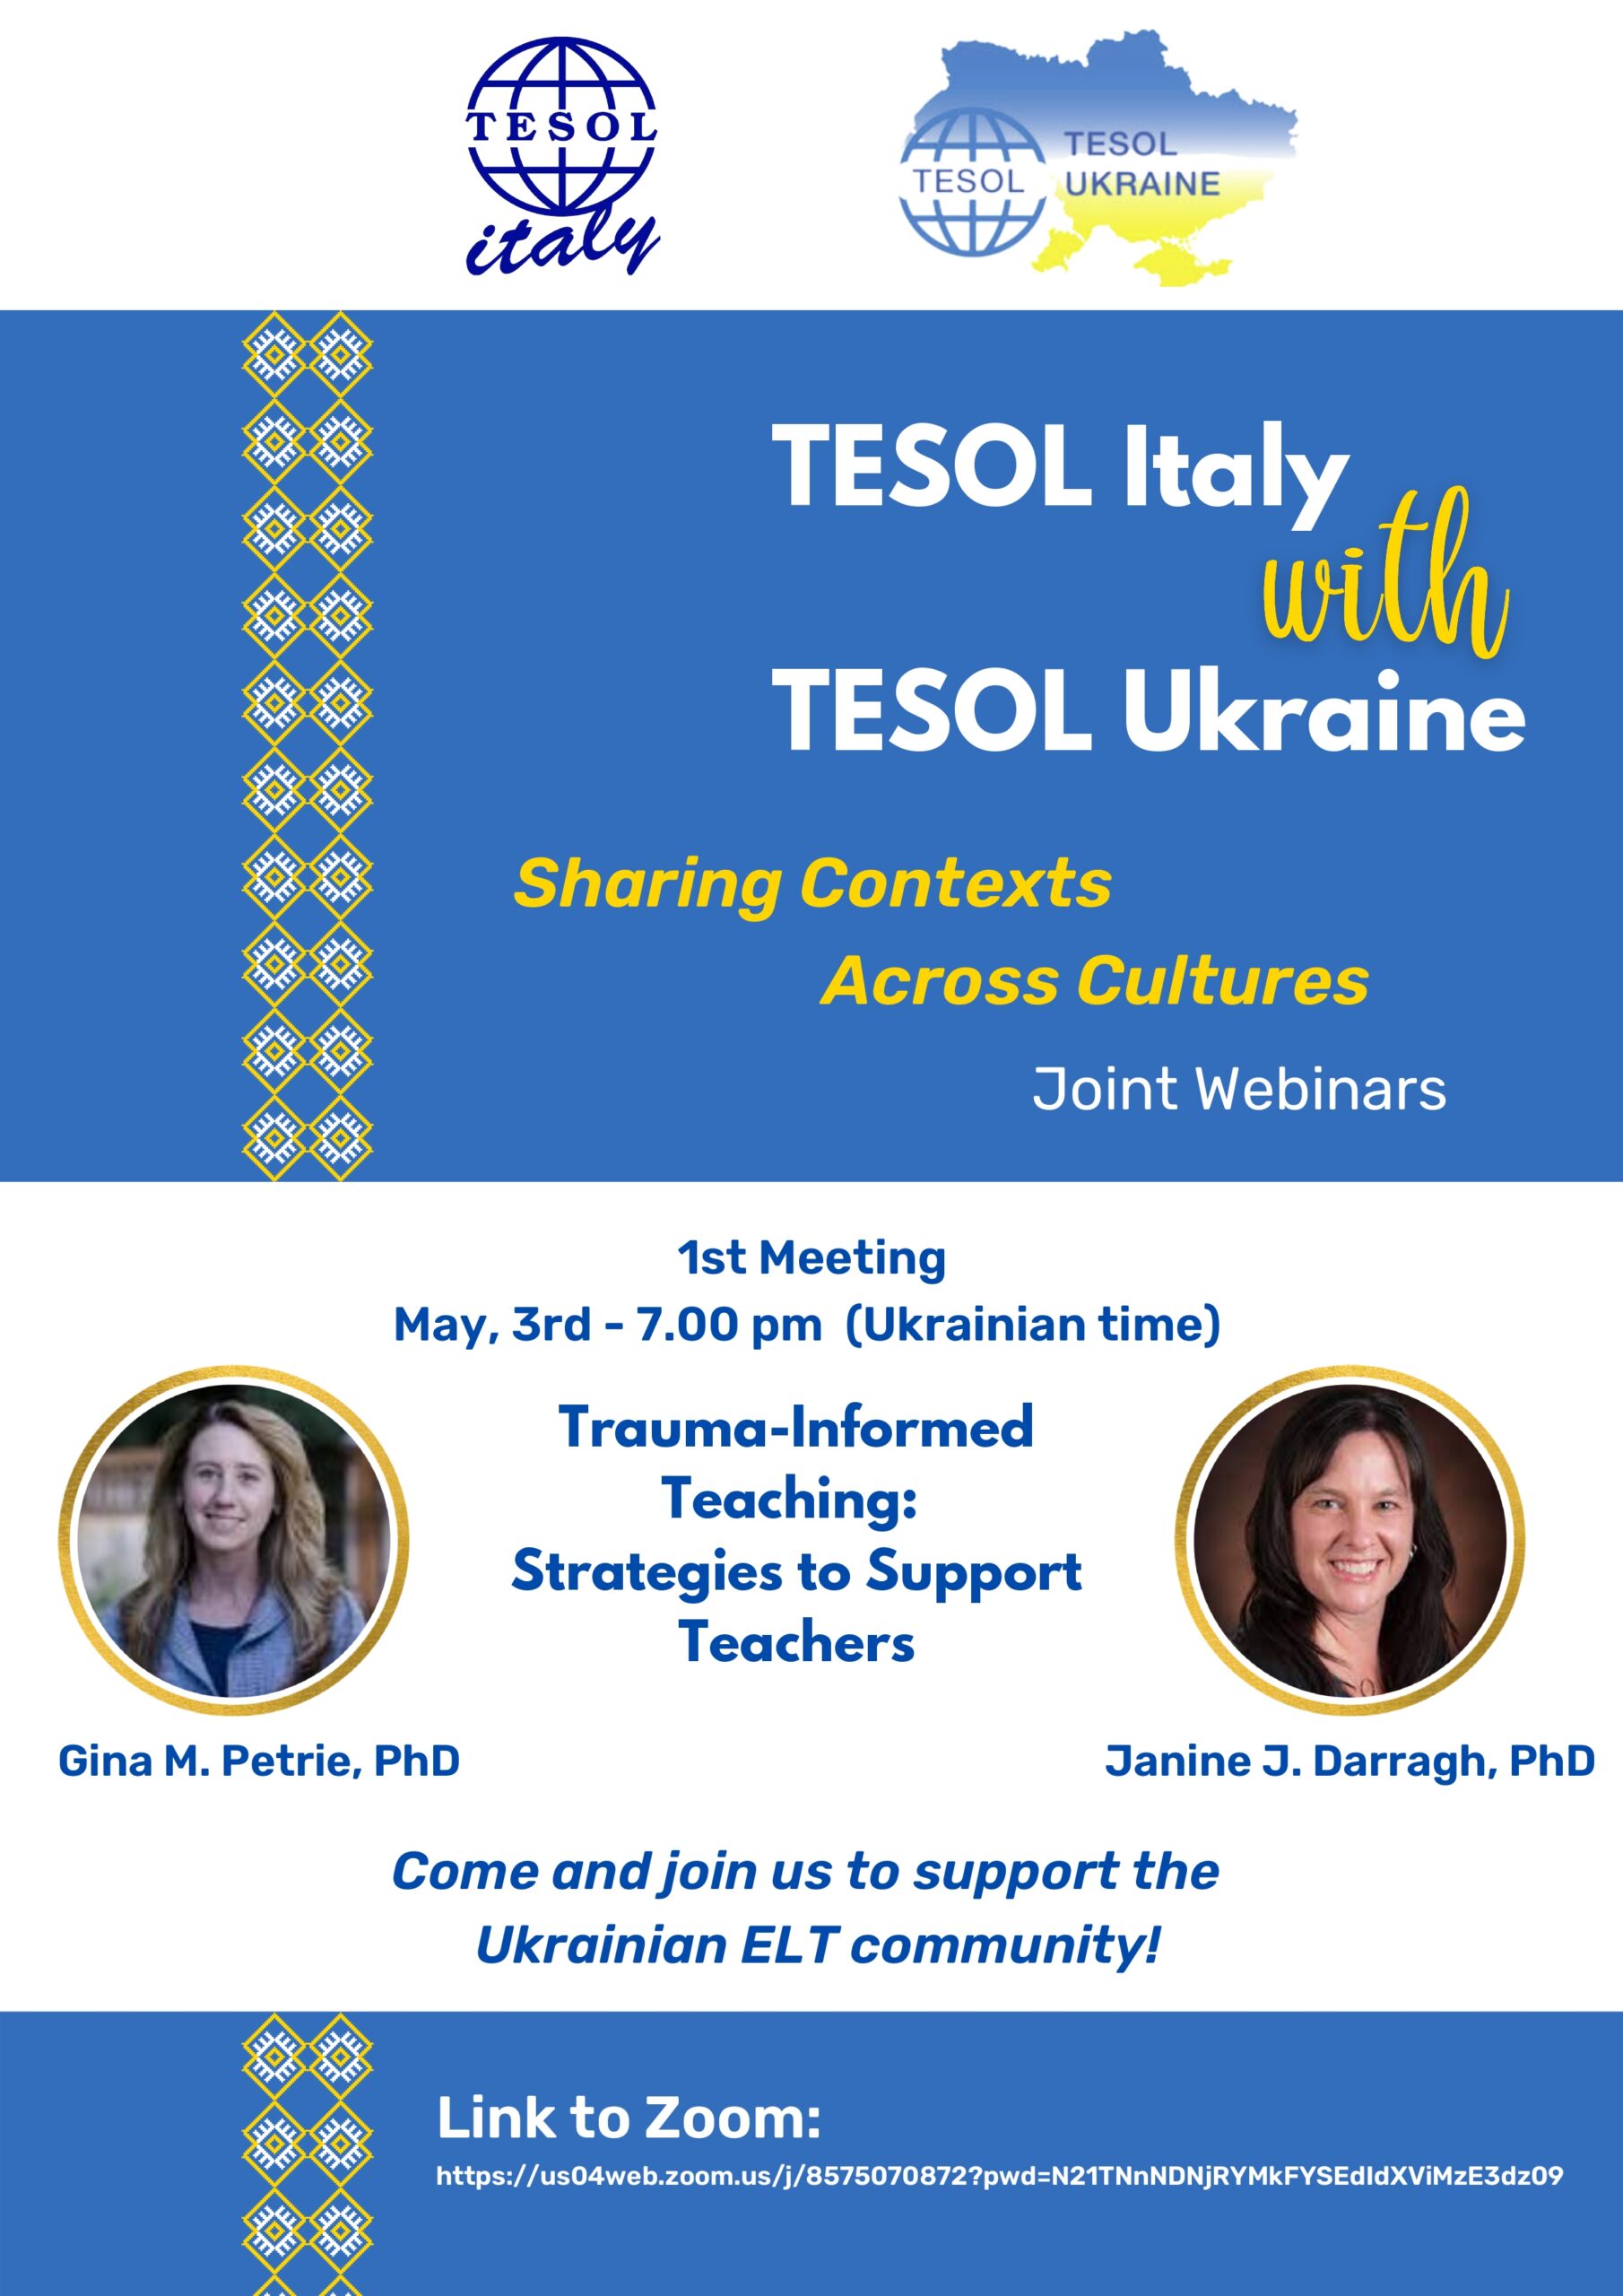 TESOL Italy with TESOL Ukraine